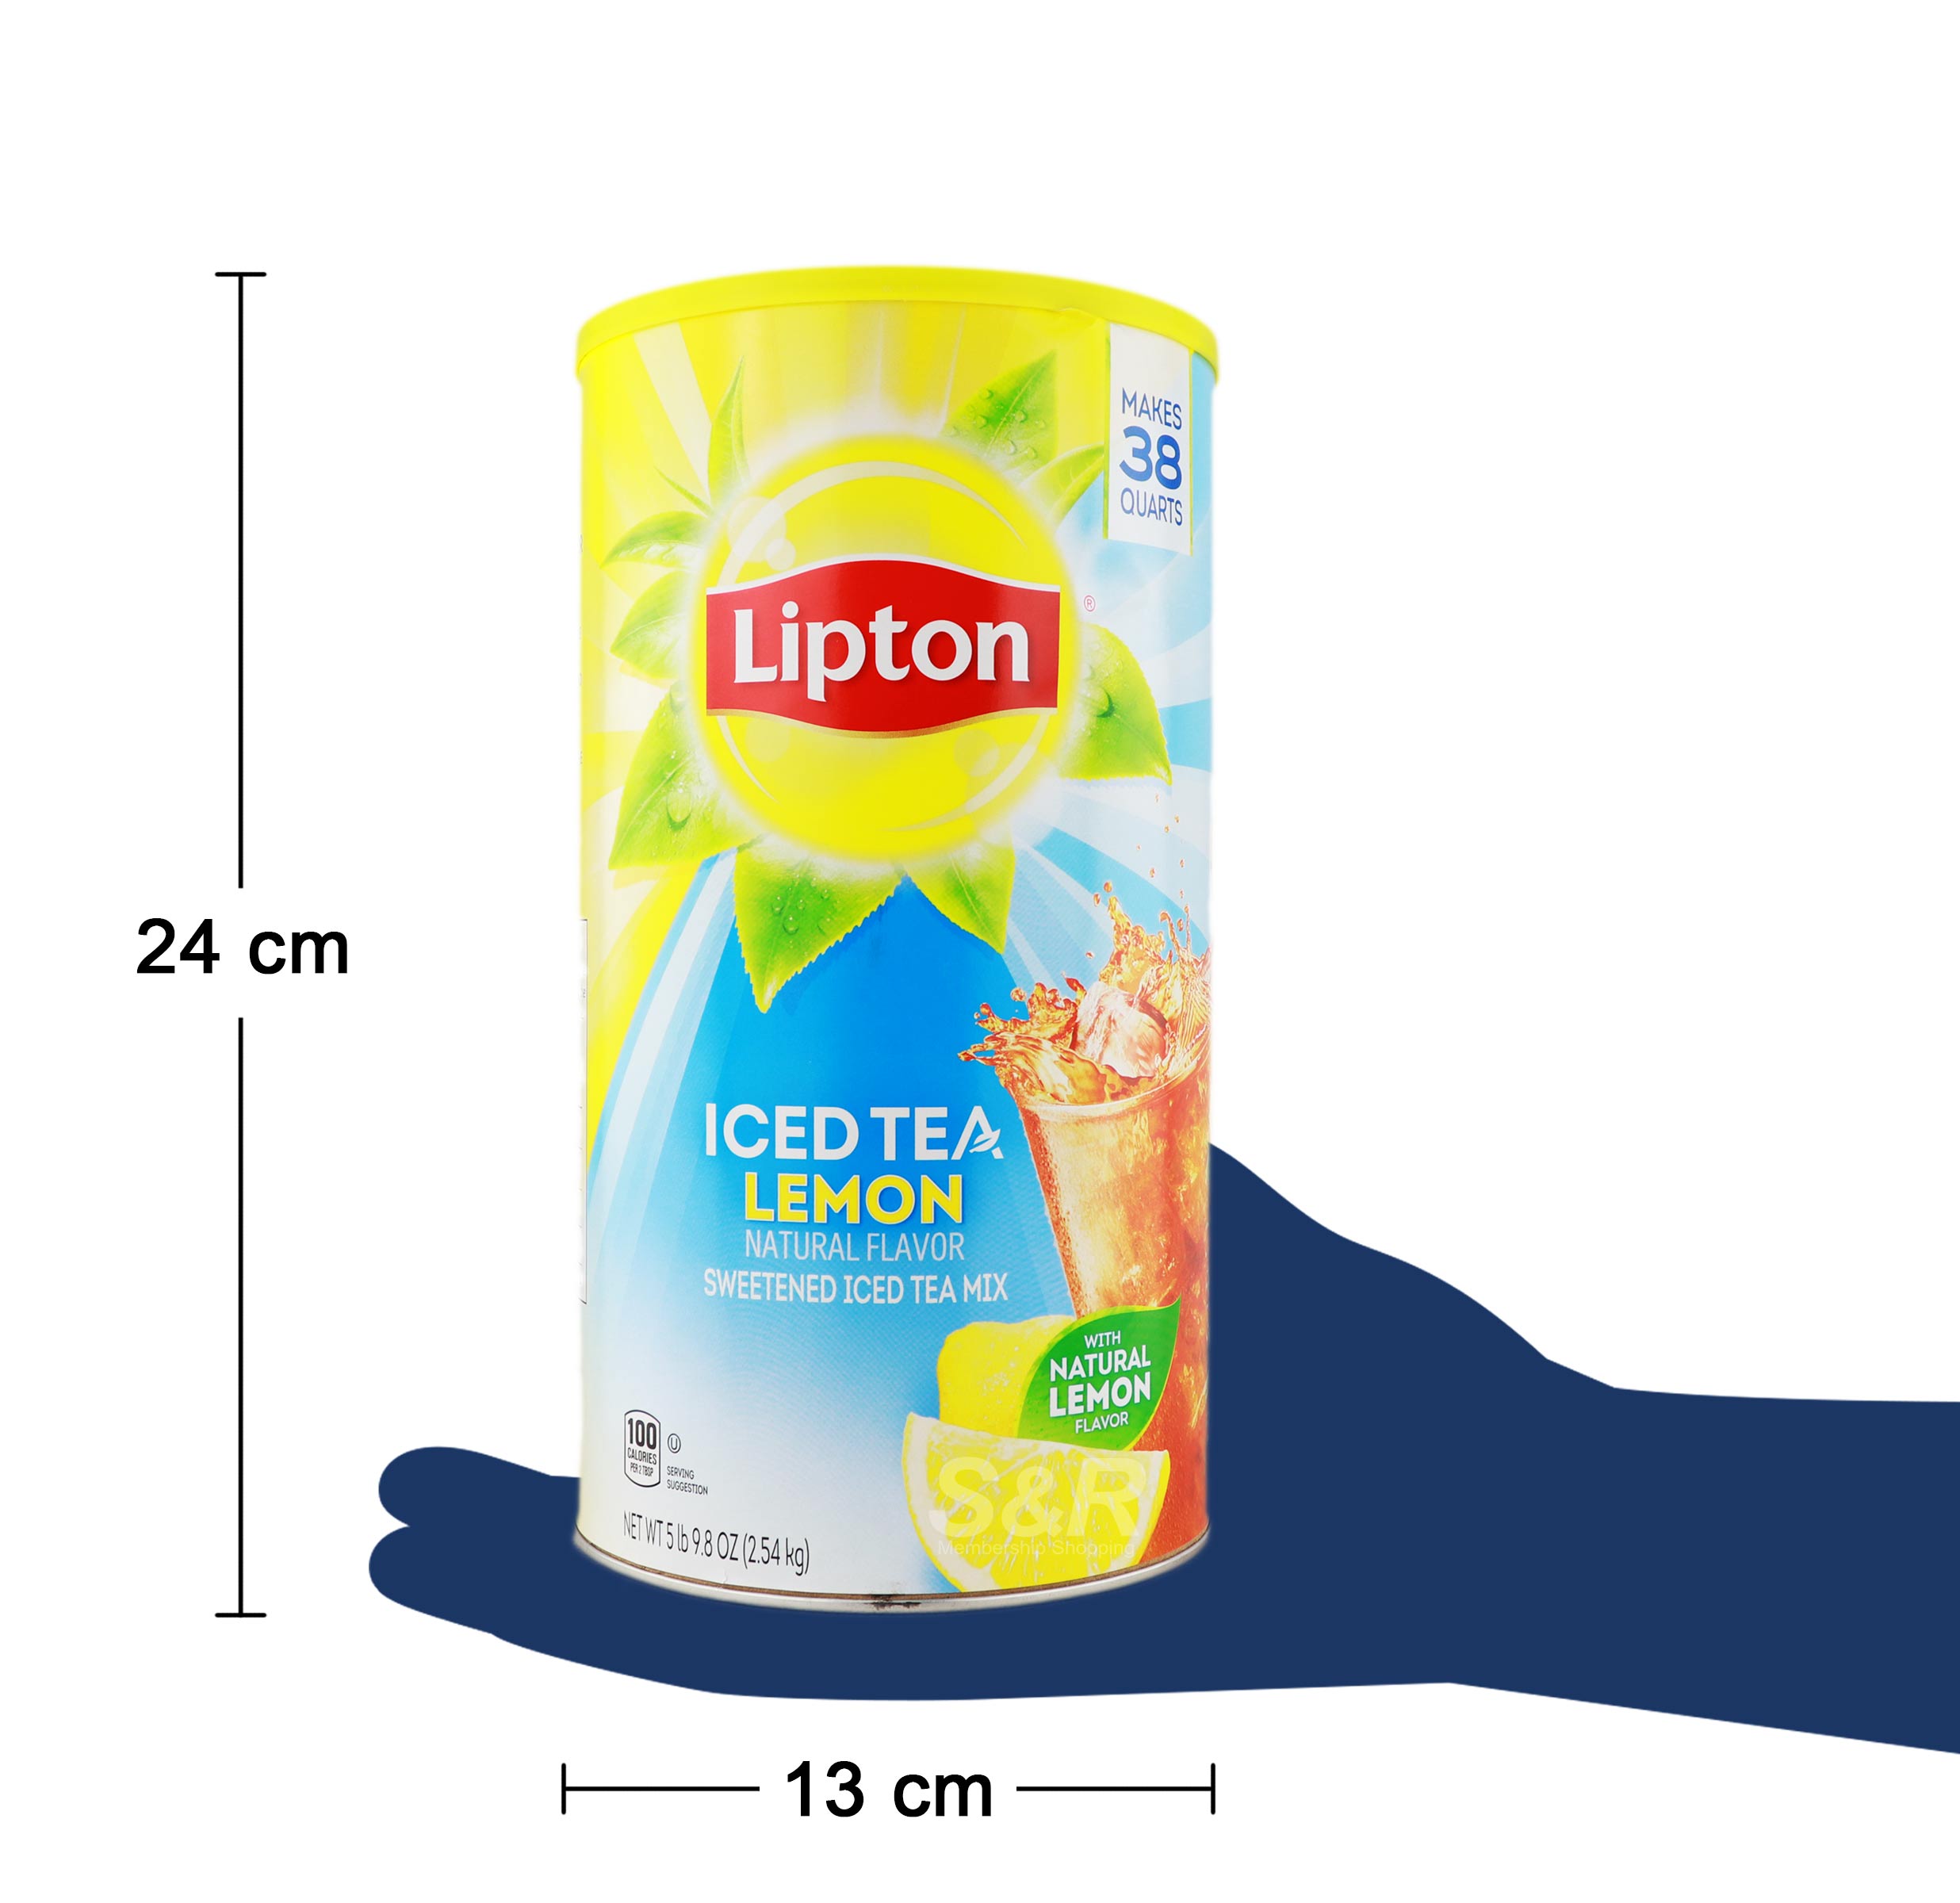 Lipton Lemon Iced Tea Mix, 28 Quarts (Pack of 2)